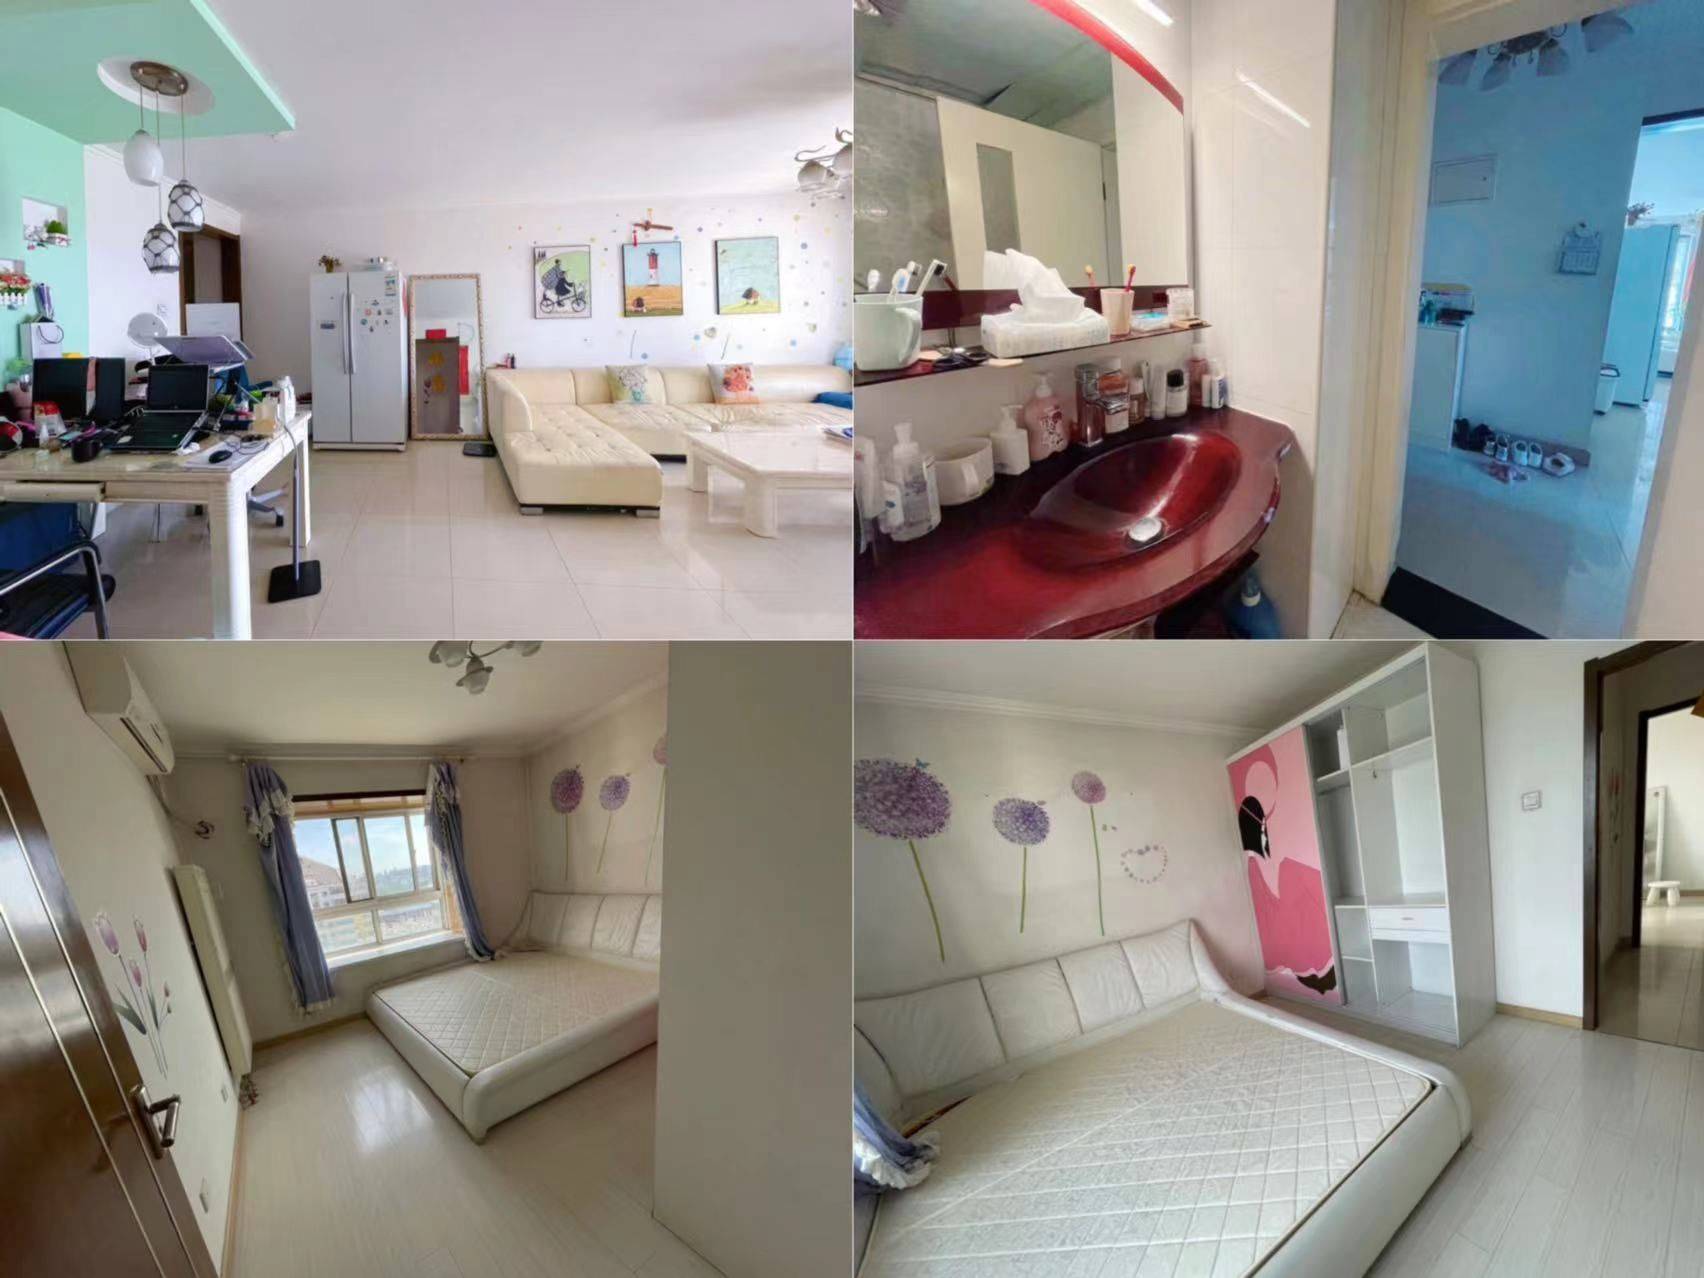 Beijing-Chaoyang-Cozy Home,Clean&Comfy,No Gender Limit,Hustle & Bustle,“Friends”,Chilled,Pet Friendly